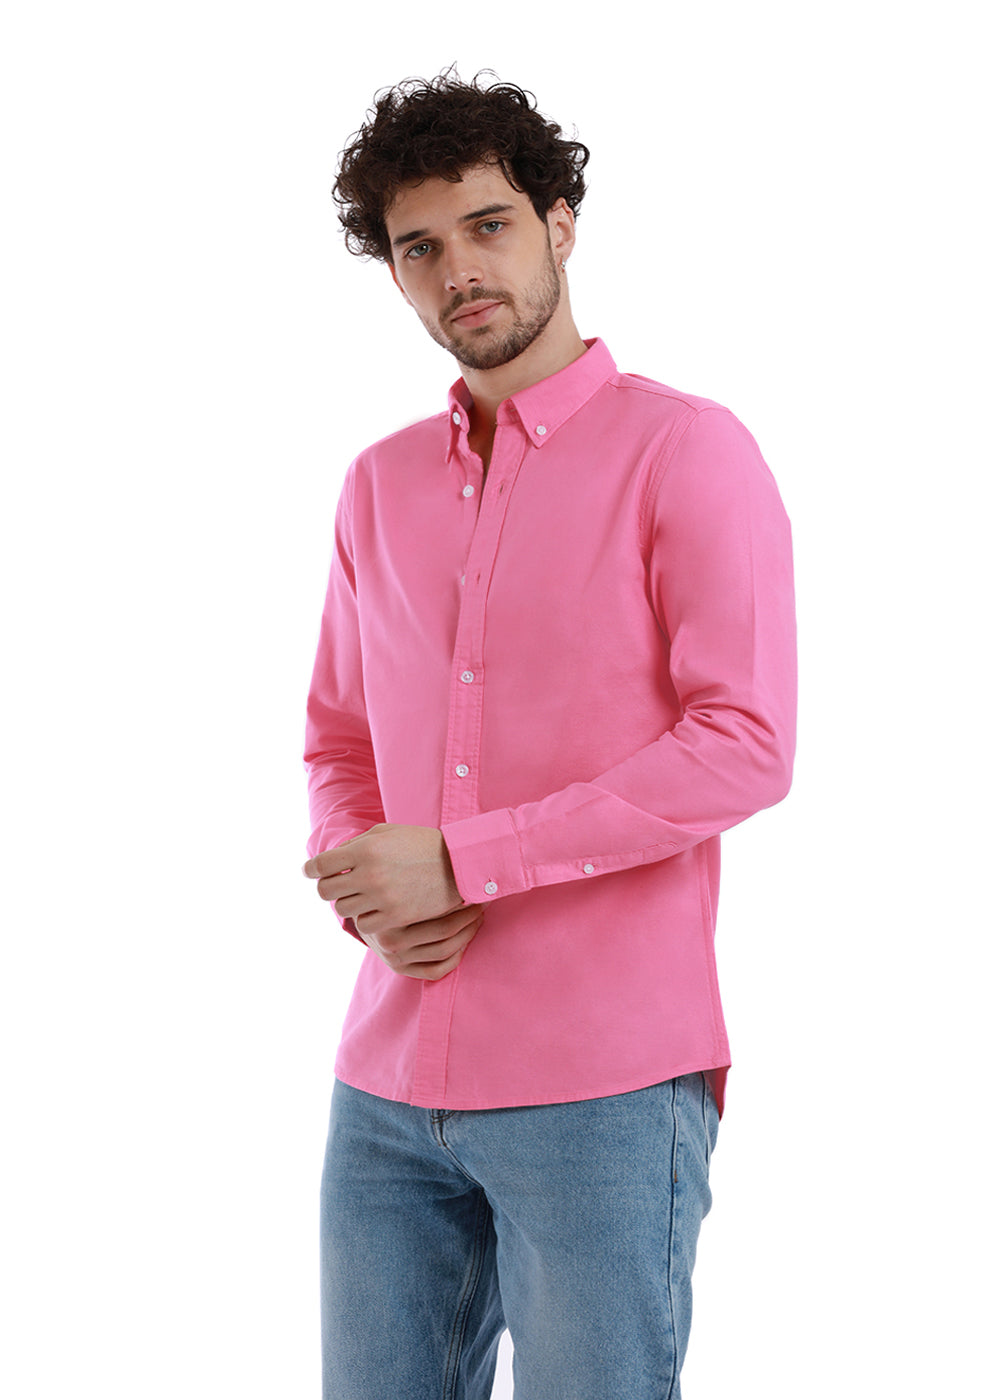 Pink shirt and blue pants | Blue pants, Pink shirt, Mens fashion